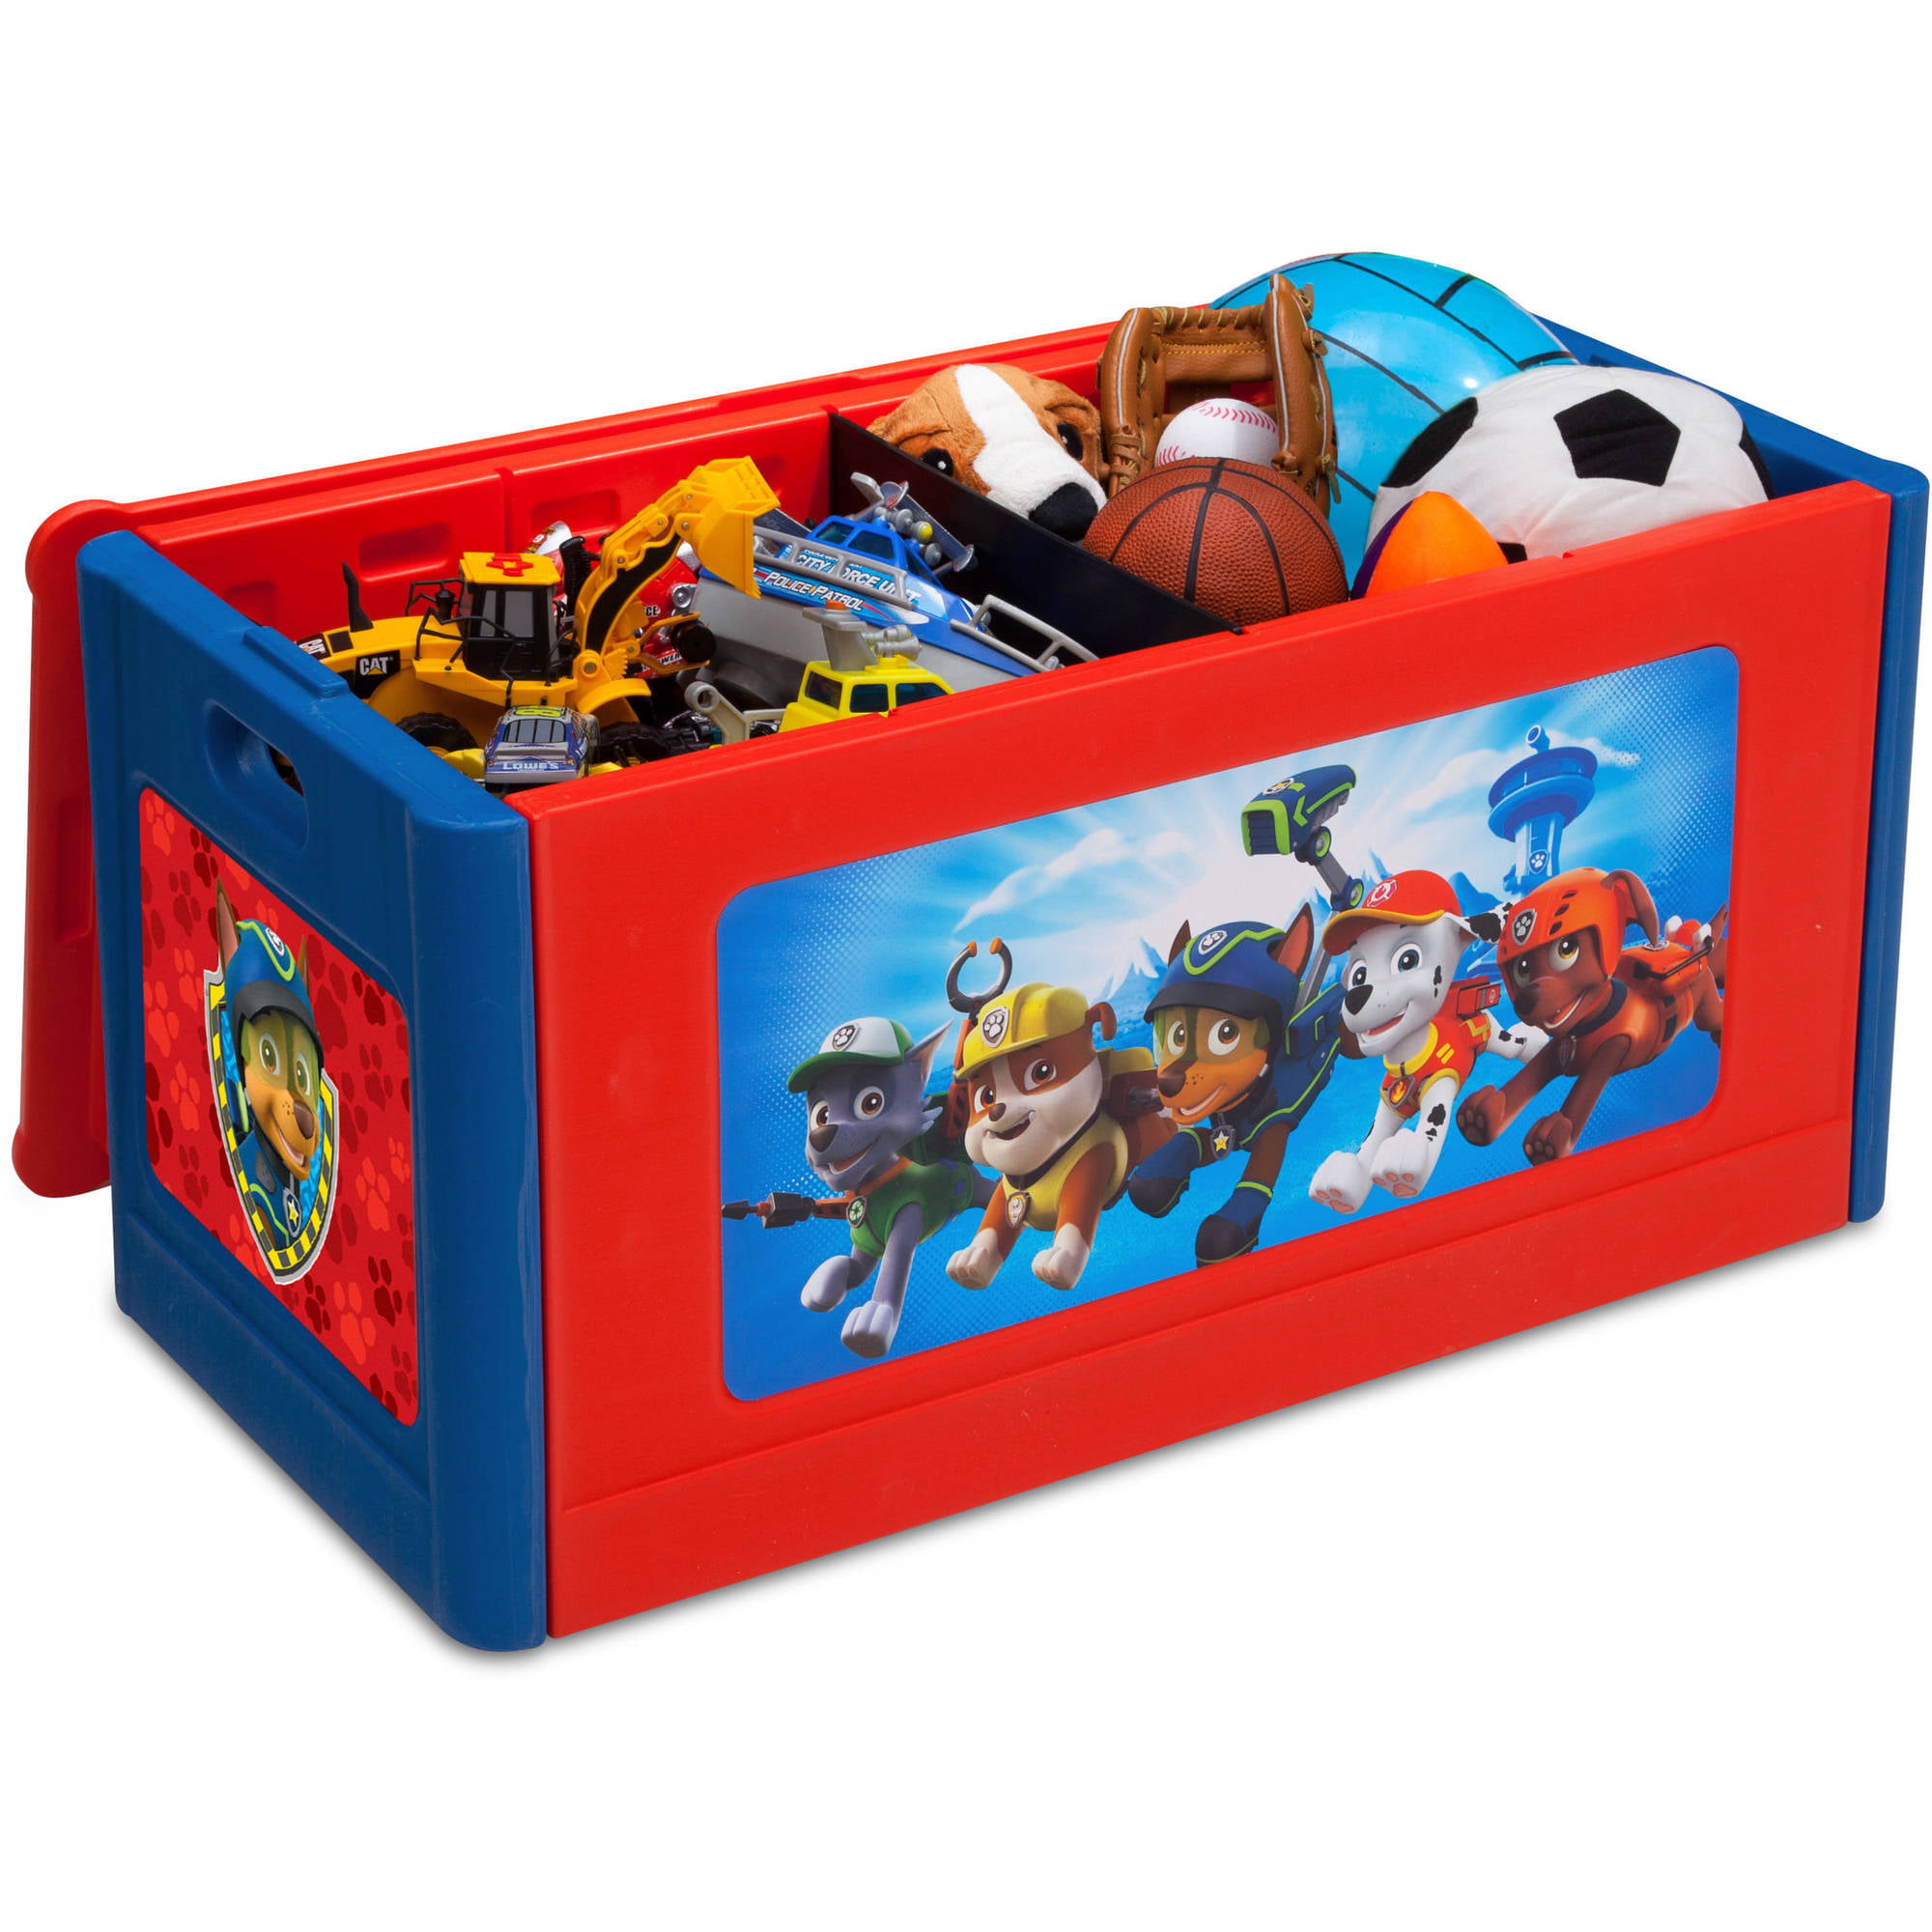 plastic toy chest